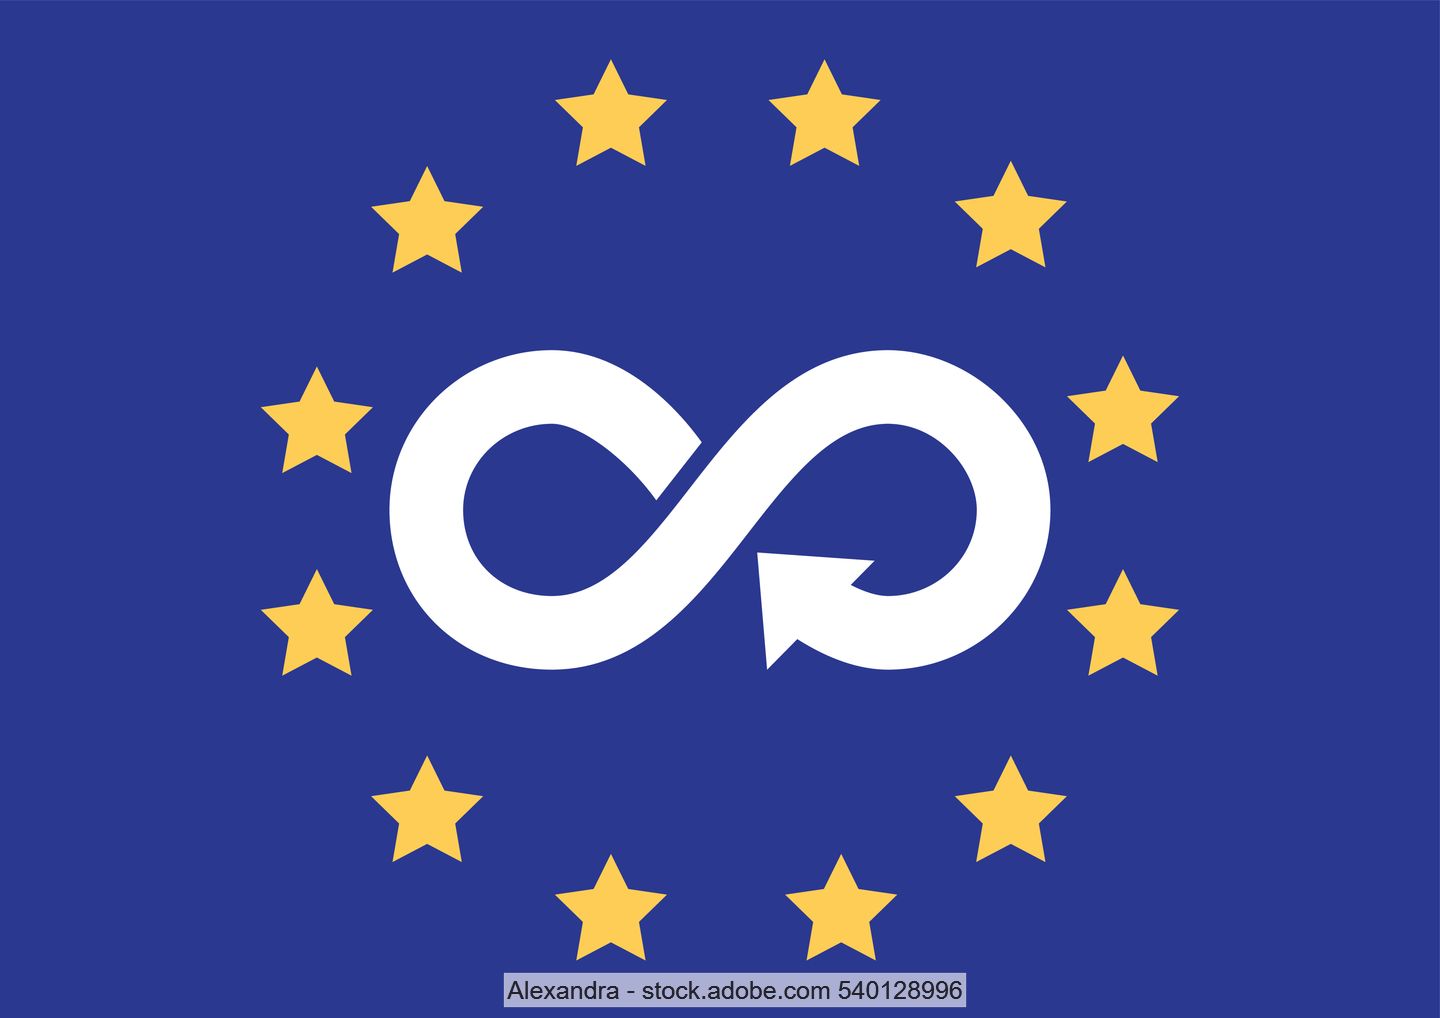 EU stars circle with circular economy symbol in the centre